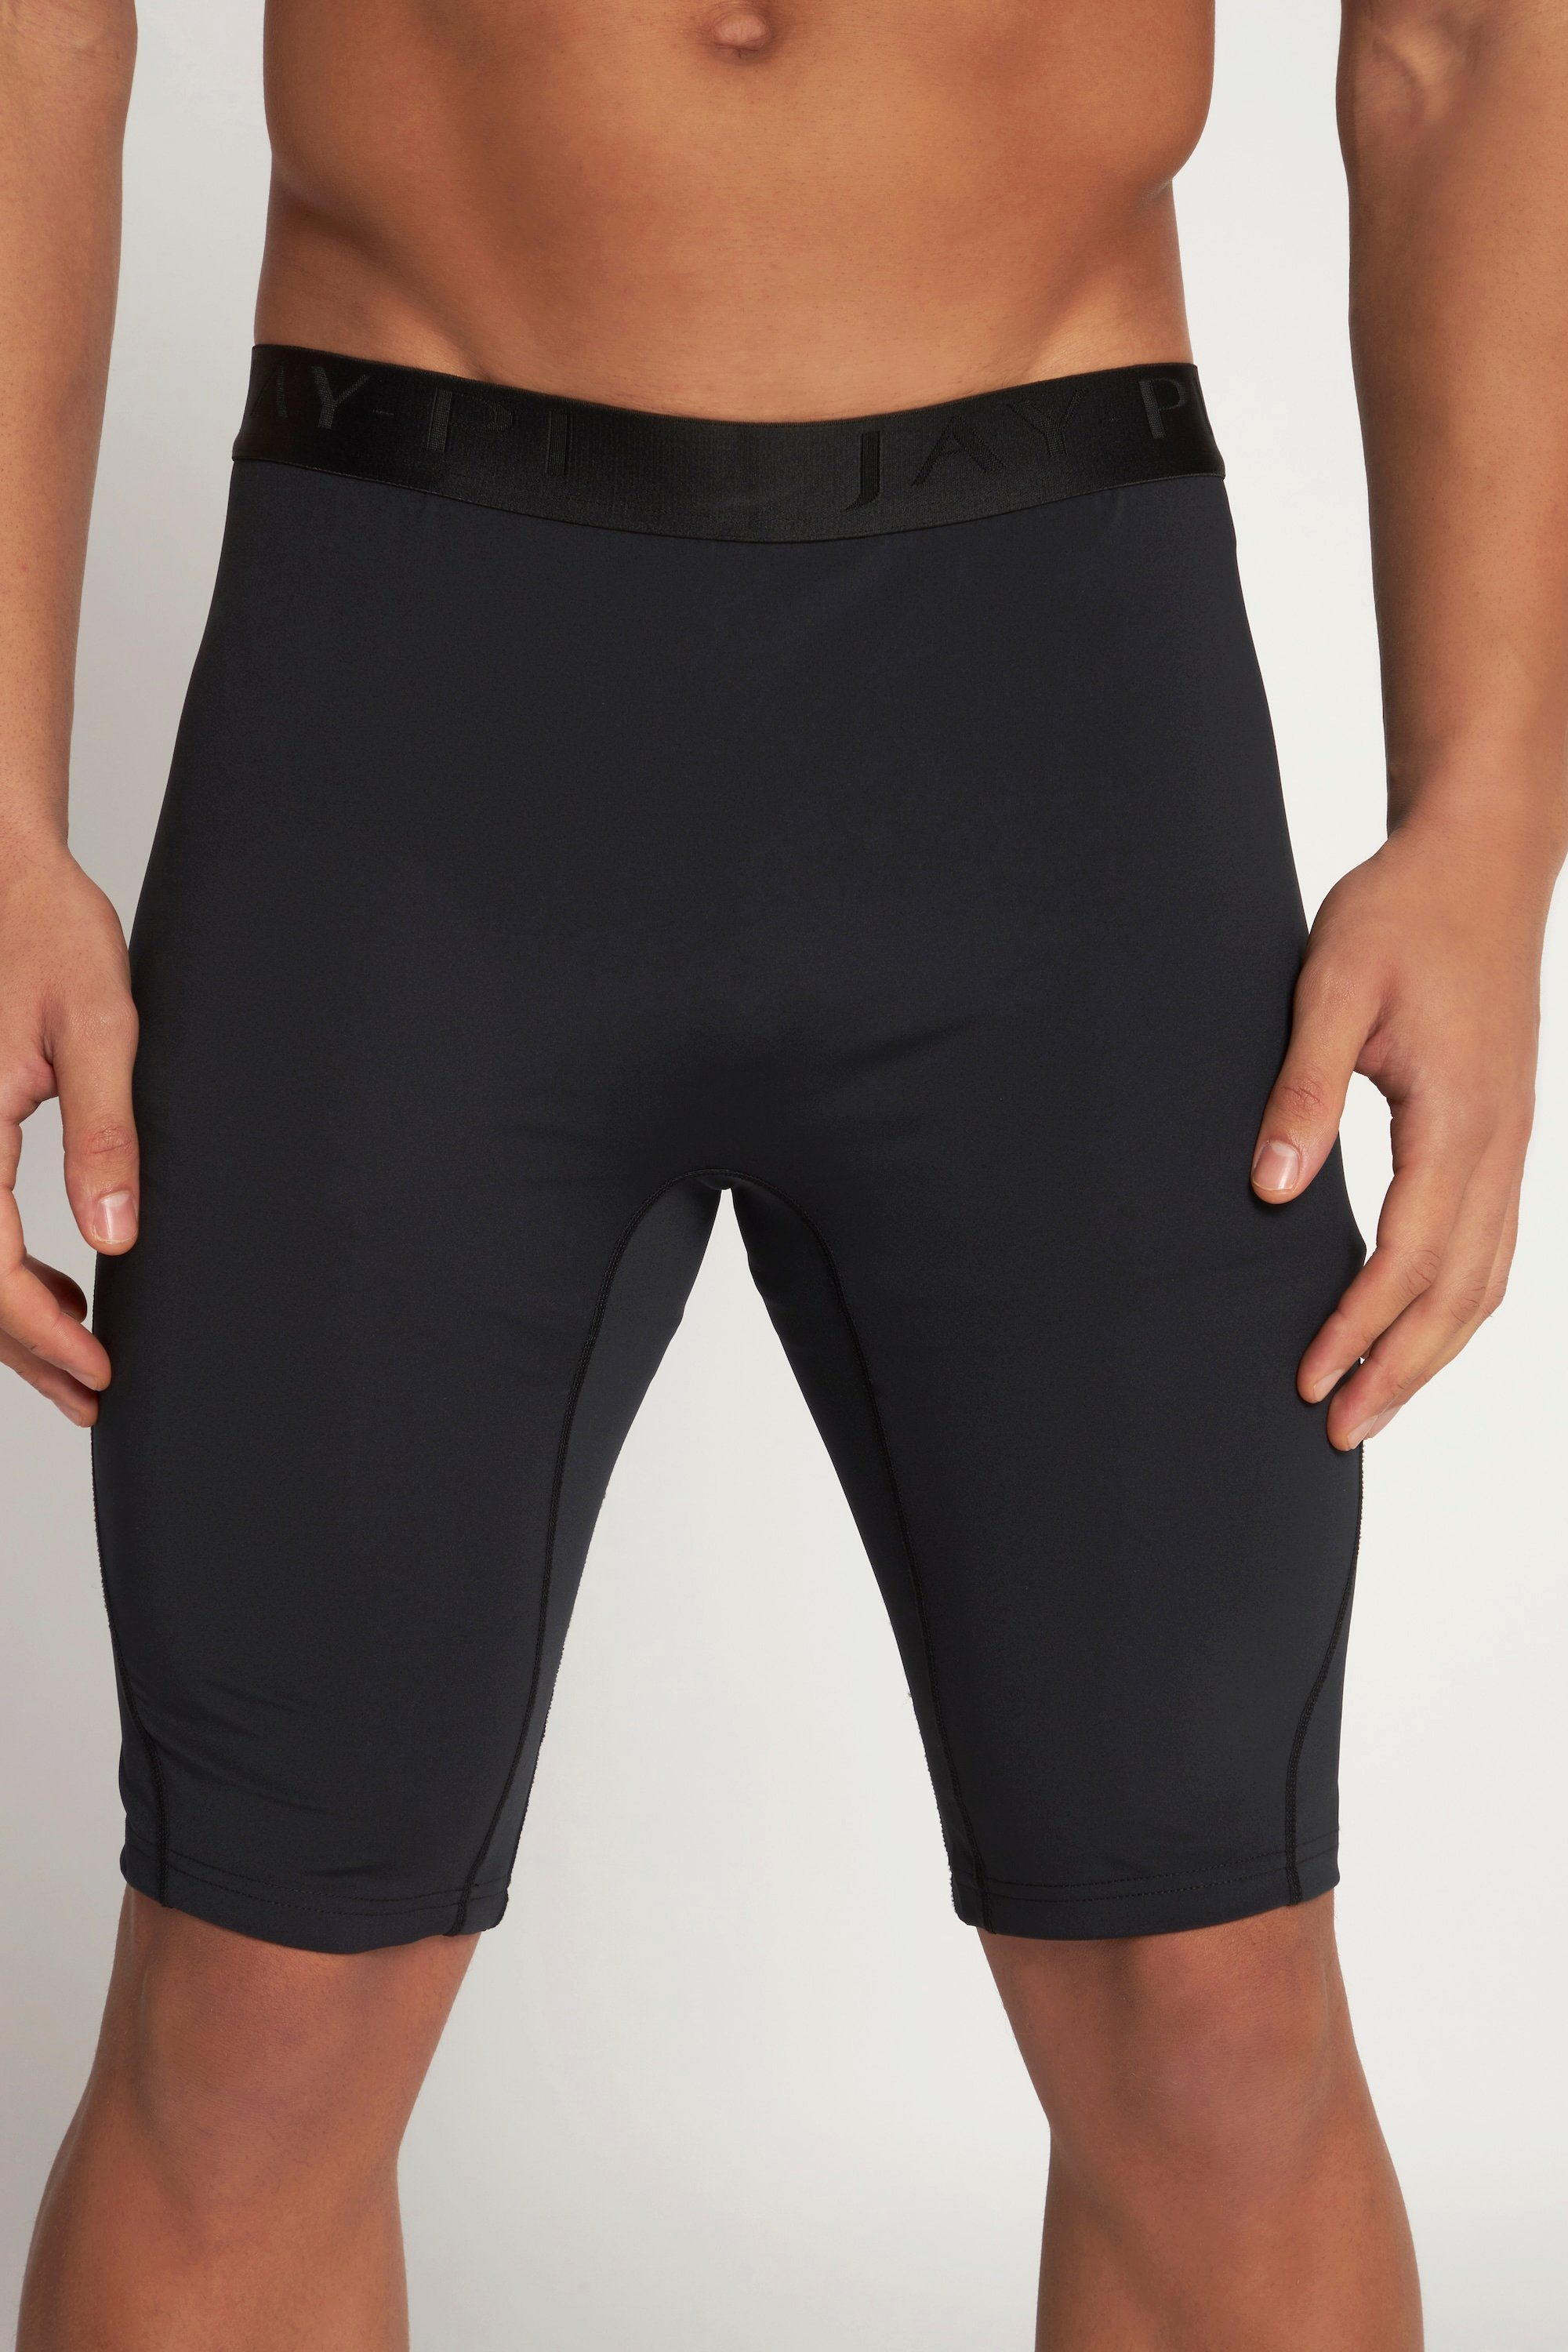 JP1880 Boxershorts Longpants Fitness Unterhose schwarz